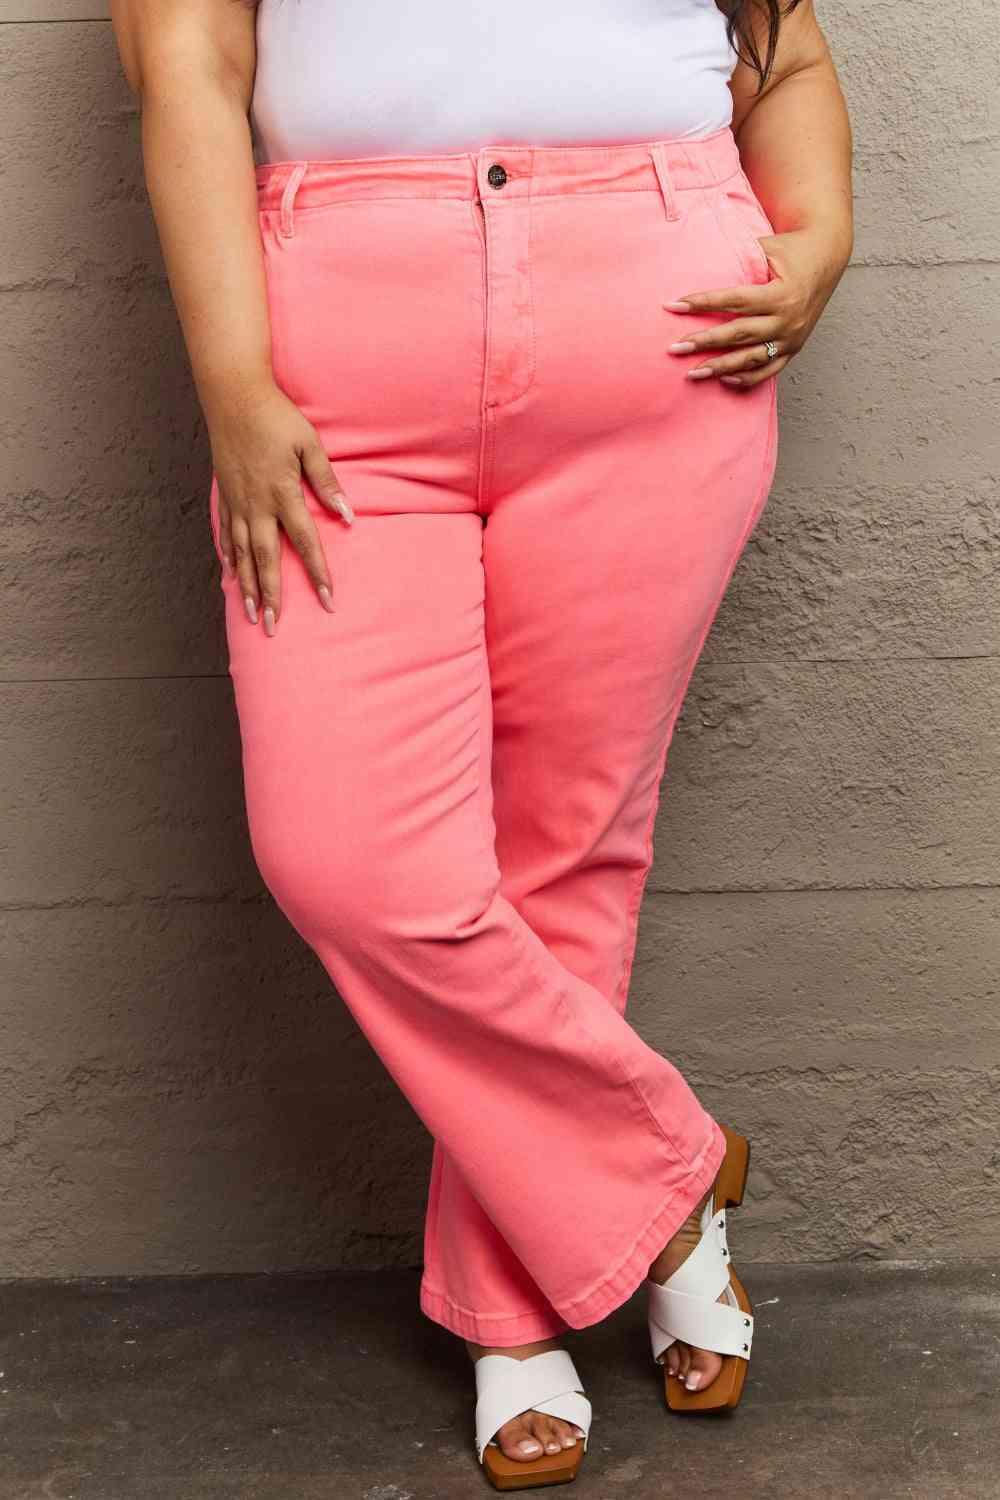 Bona Fide Fashion - Full Size High Waist Side Twill Straight Jeans - Women Fashion - Bona Fide Fashion